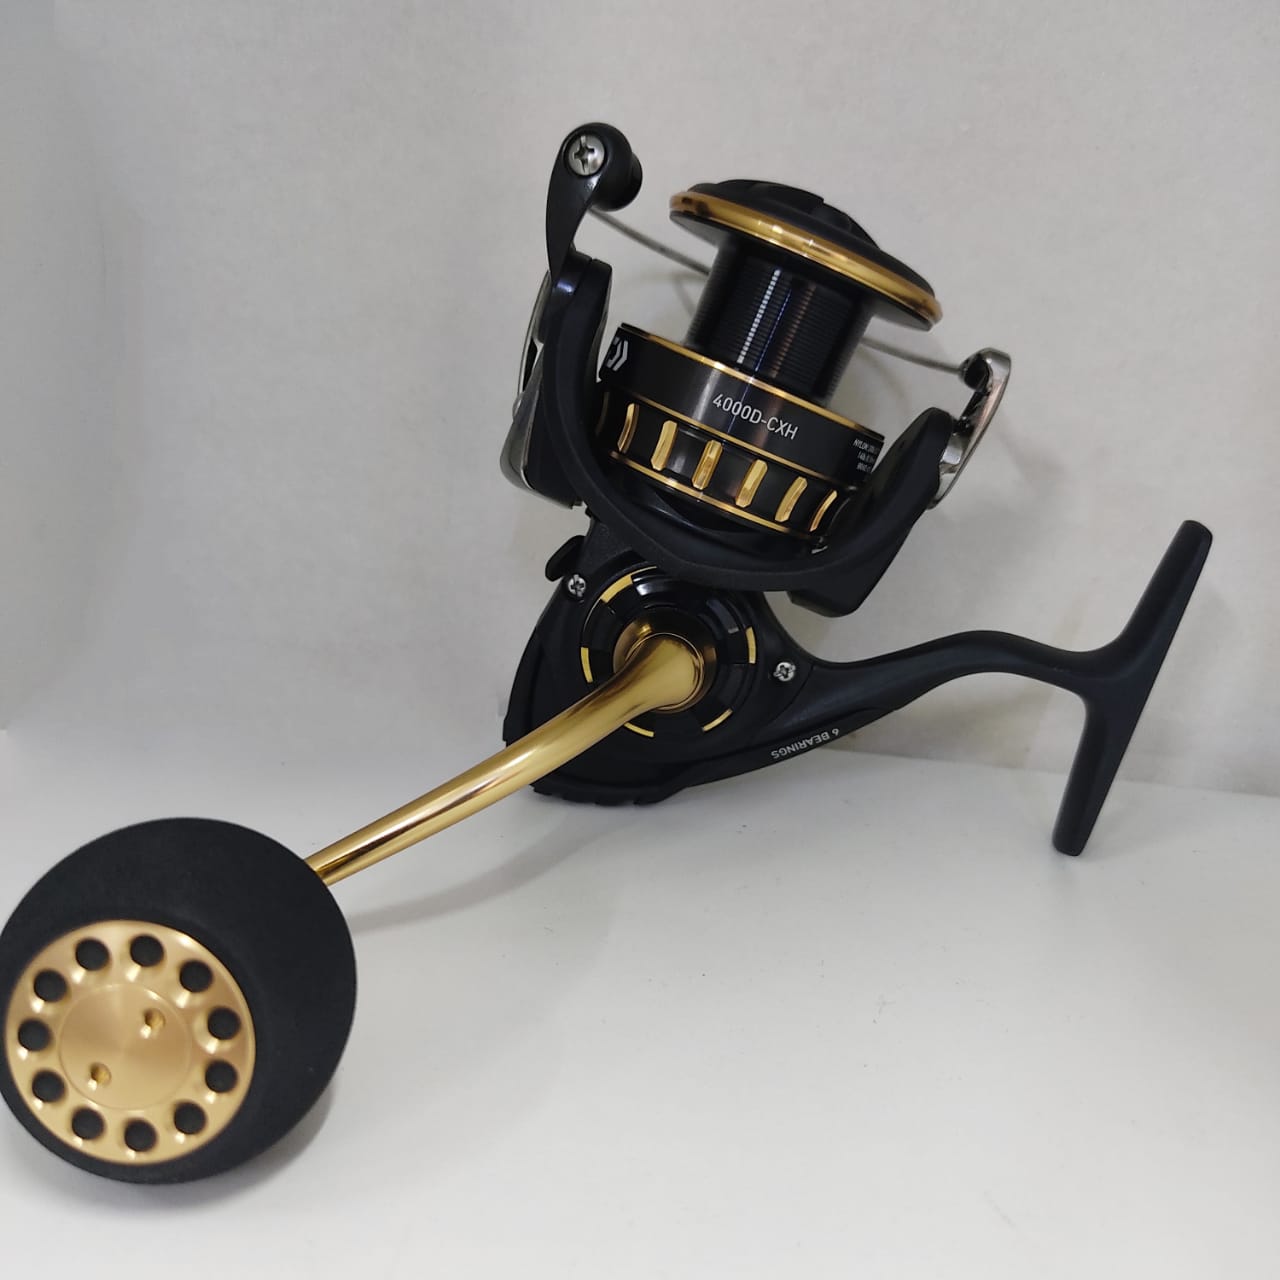 Daiwa BG 4000 Black Gold Full Metal Spinning Fishing Reel